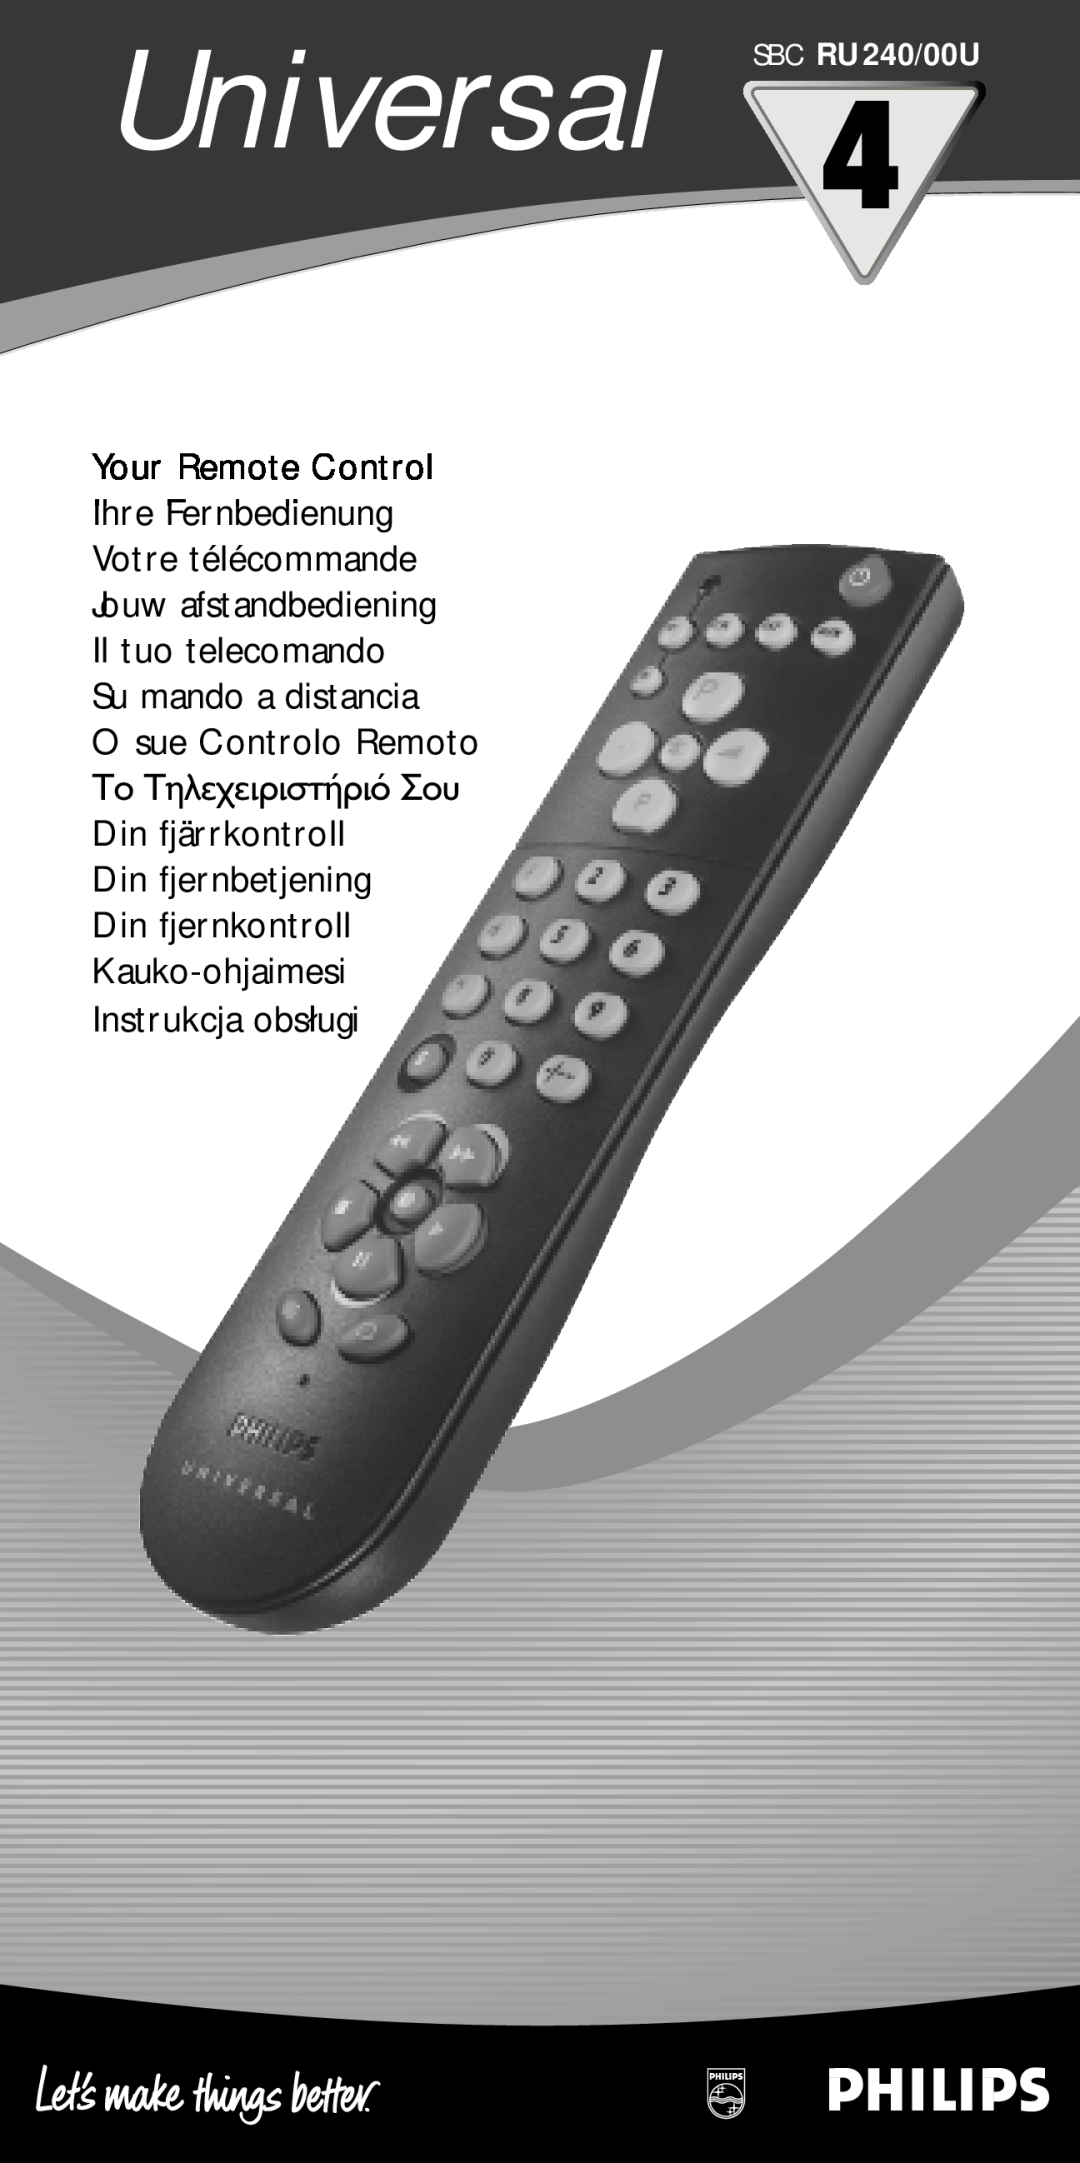 Philips manual Universal SBC RU240/00U, Your Remote Control Ihre Fernbedienung, Il tuo telecomando Su mando a distancia 